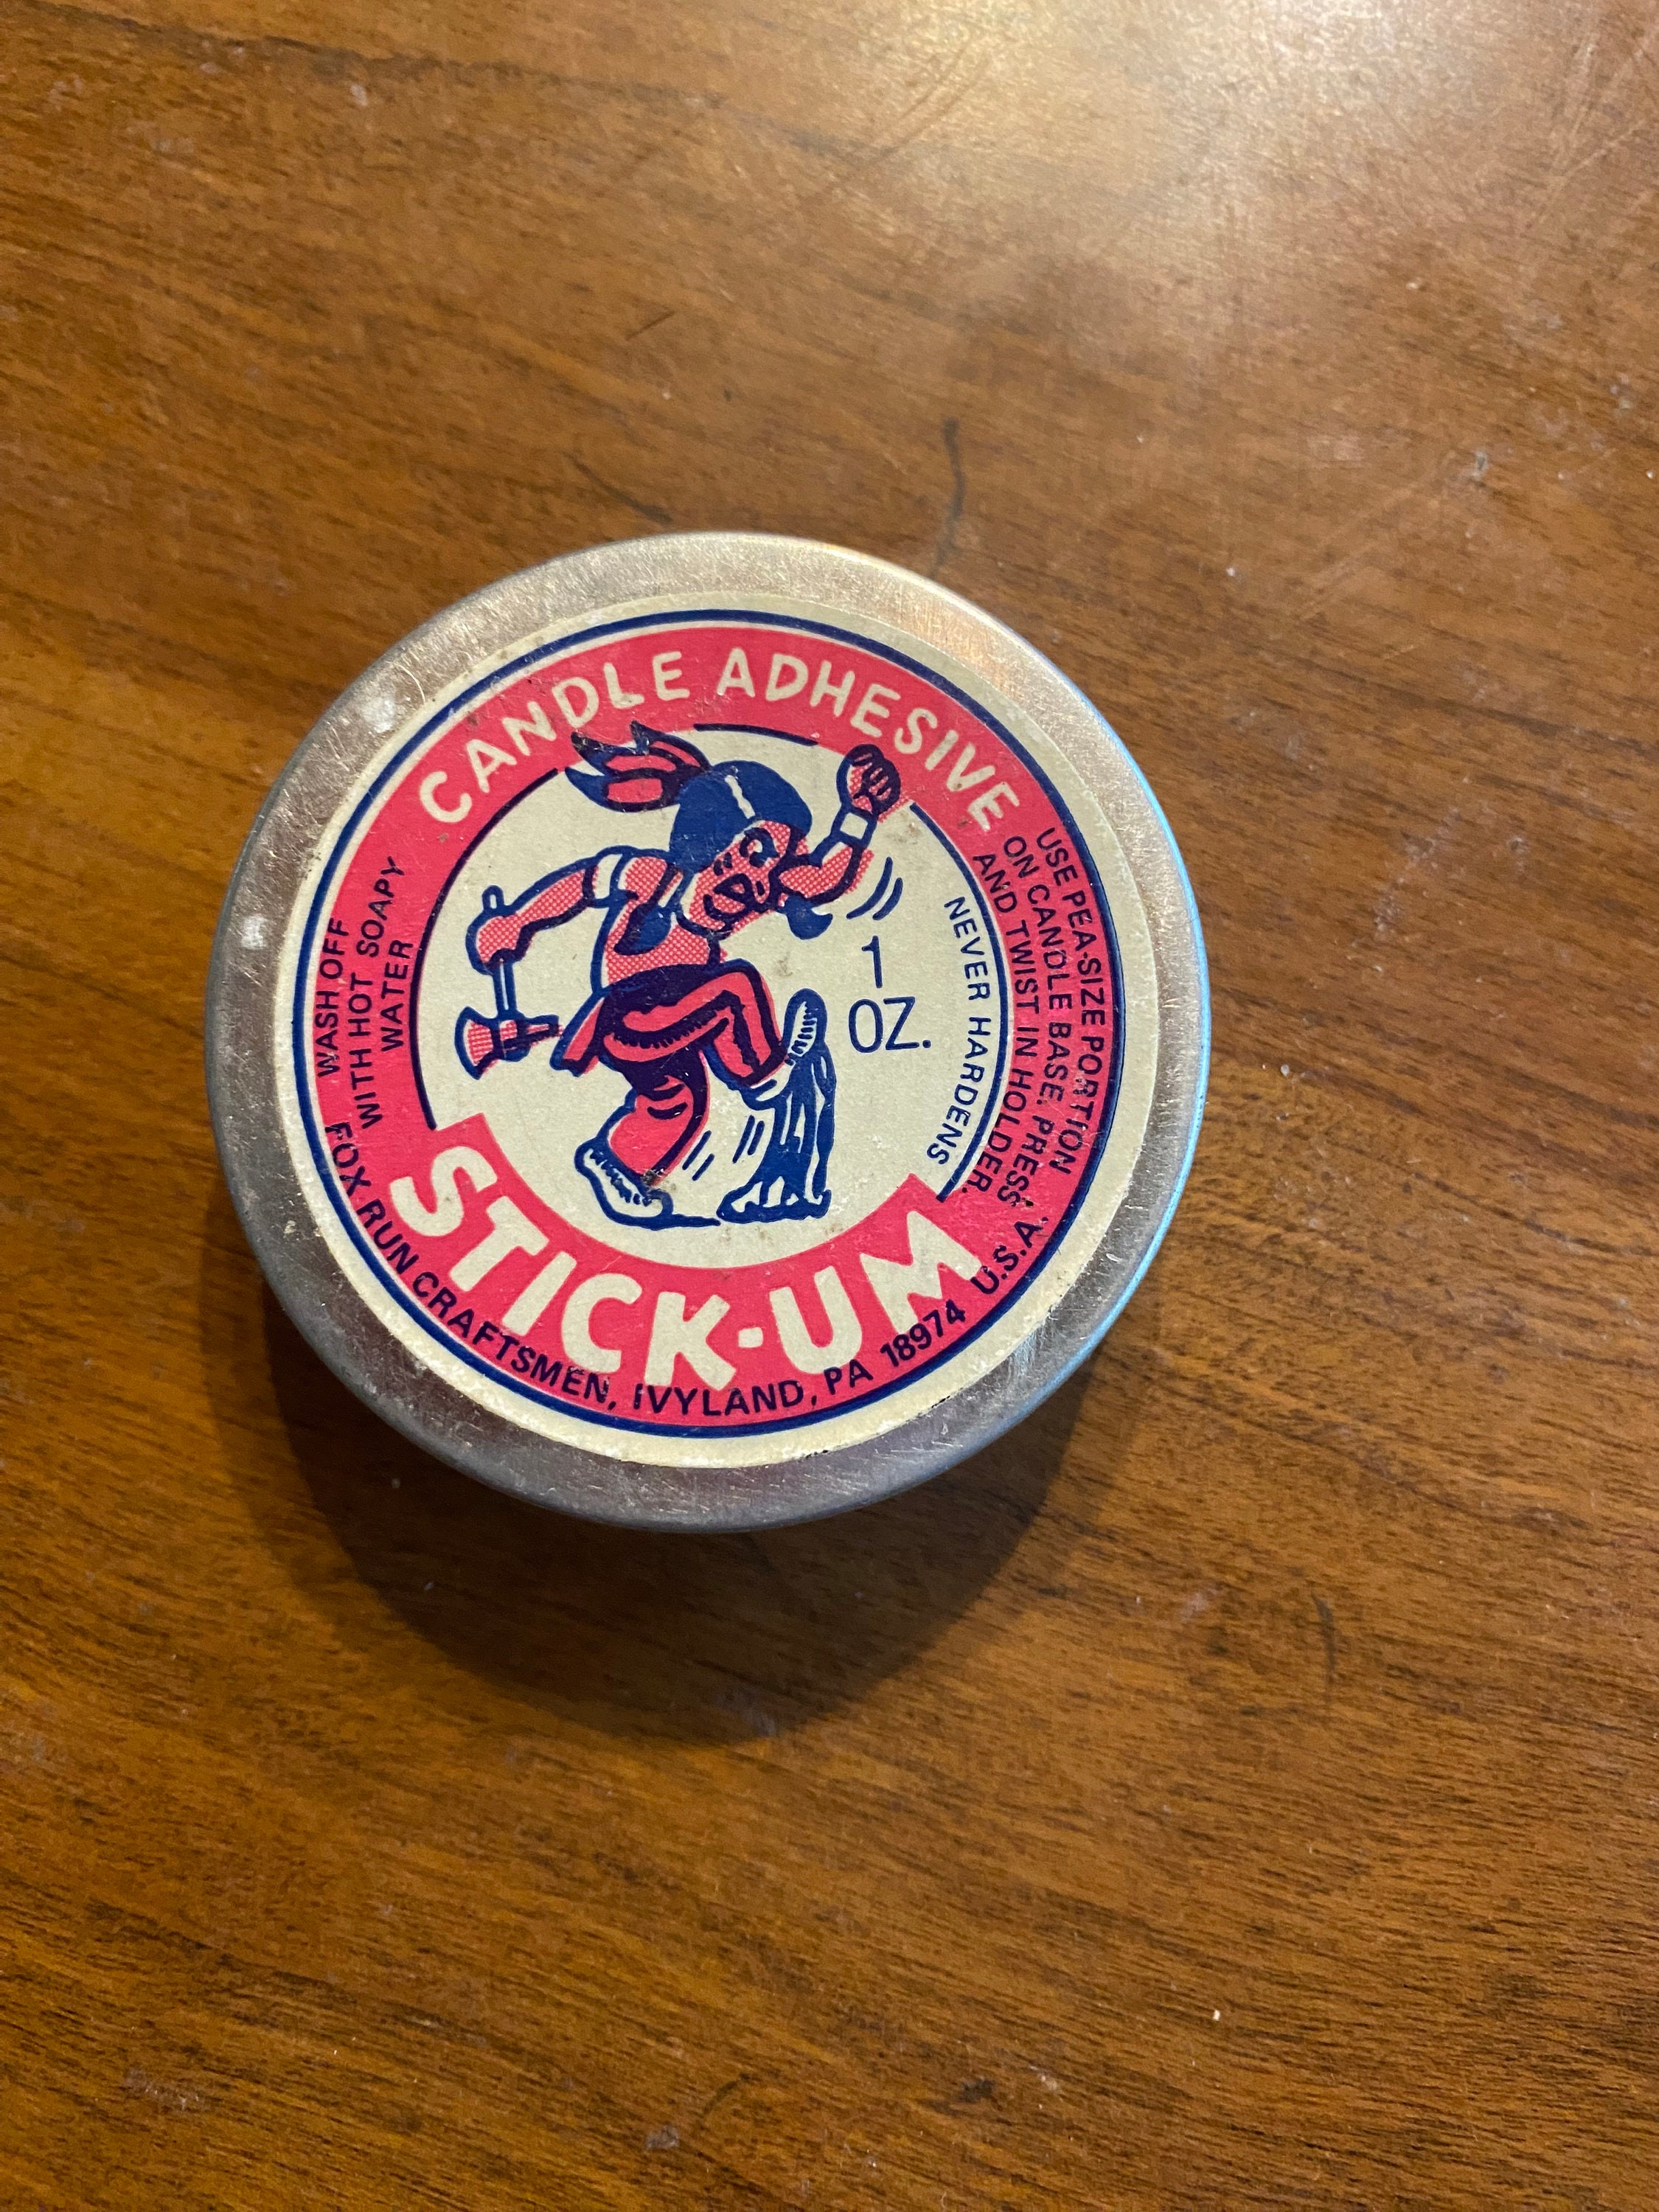 Genuine STICK UM Candle Stick Adhesive Glue 1/2 Ounce Round Metal